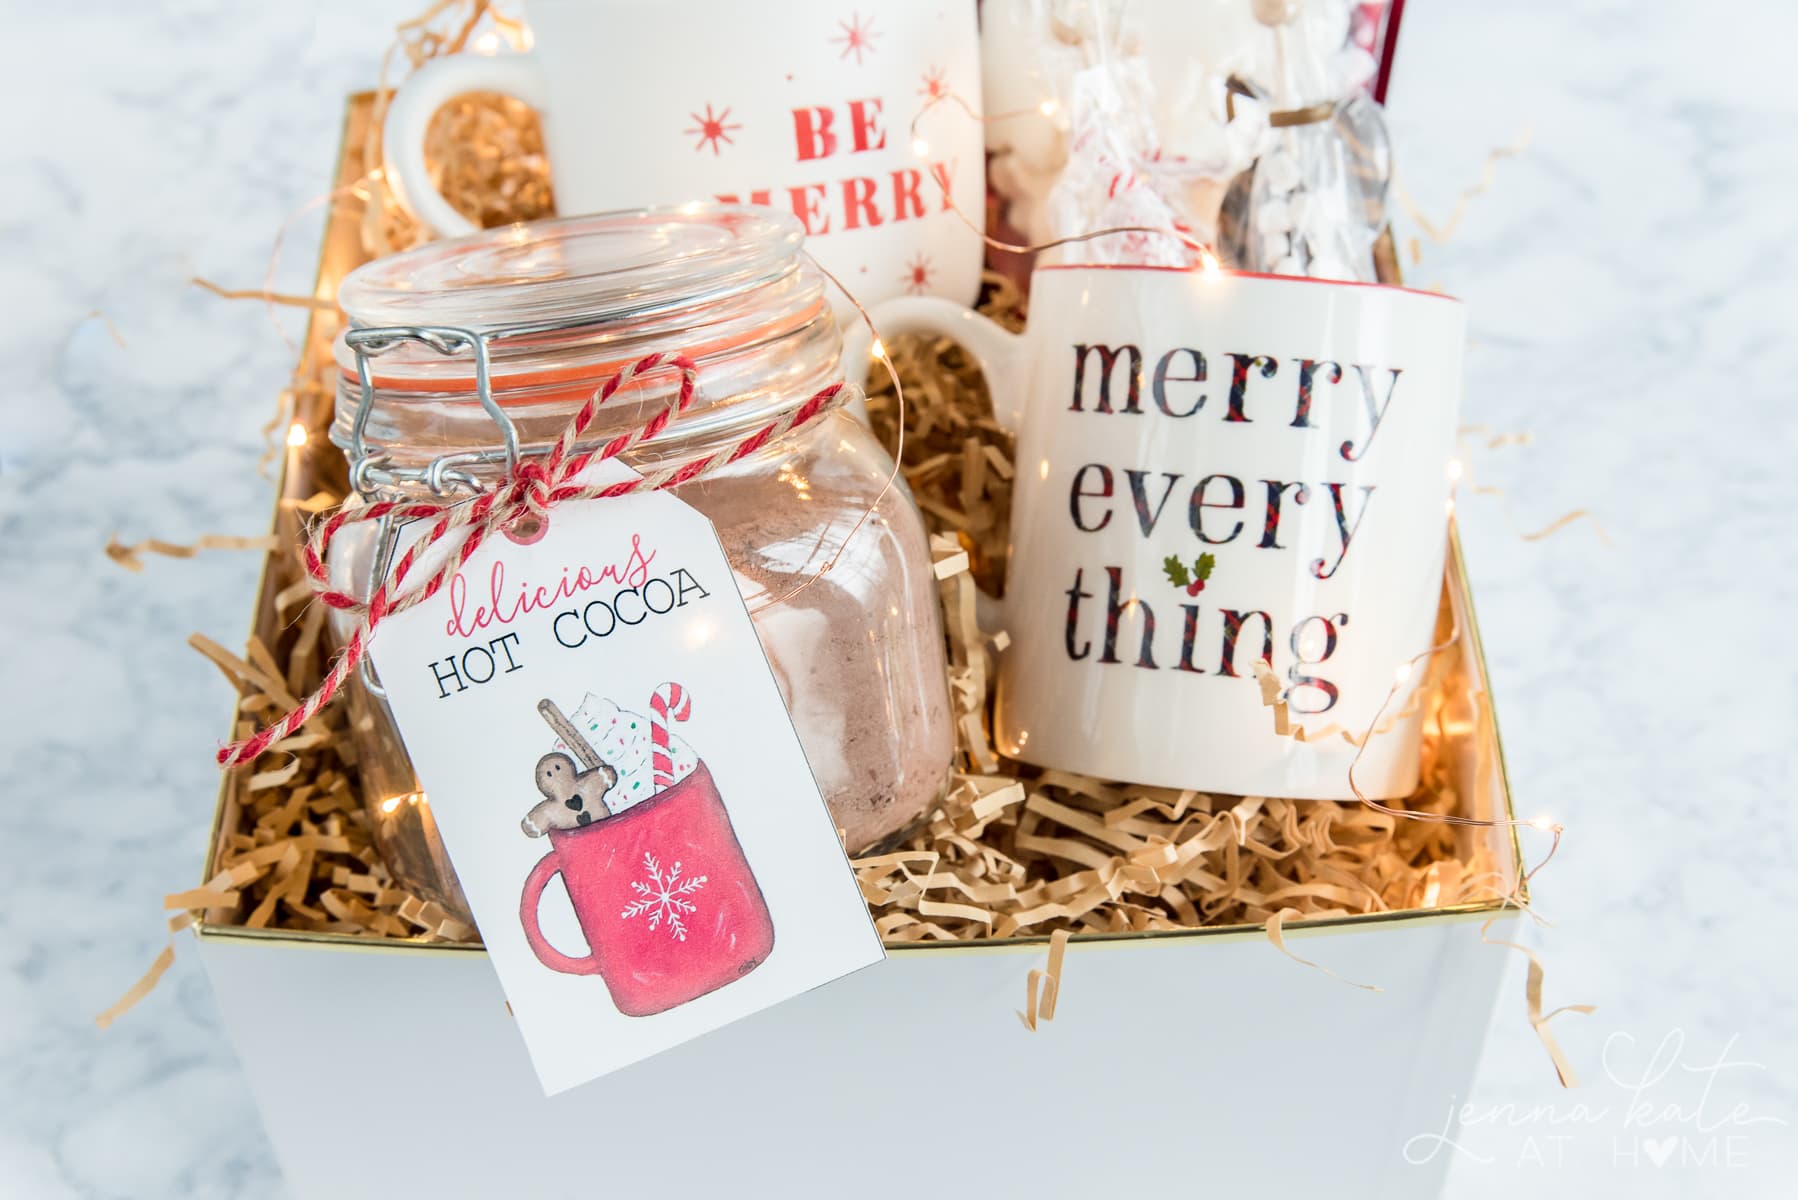 Hot chocolate gift basket idea with homemade mix, Christmas mugs, stir sticks and marshmallows